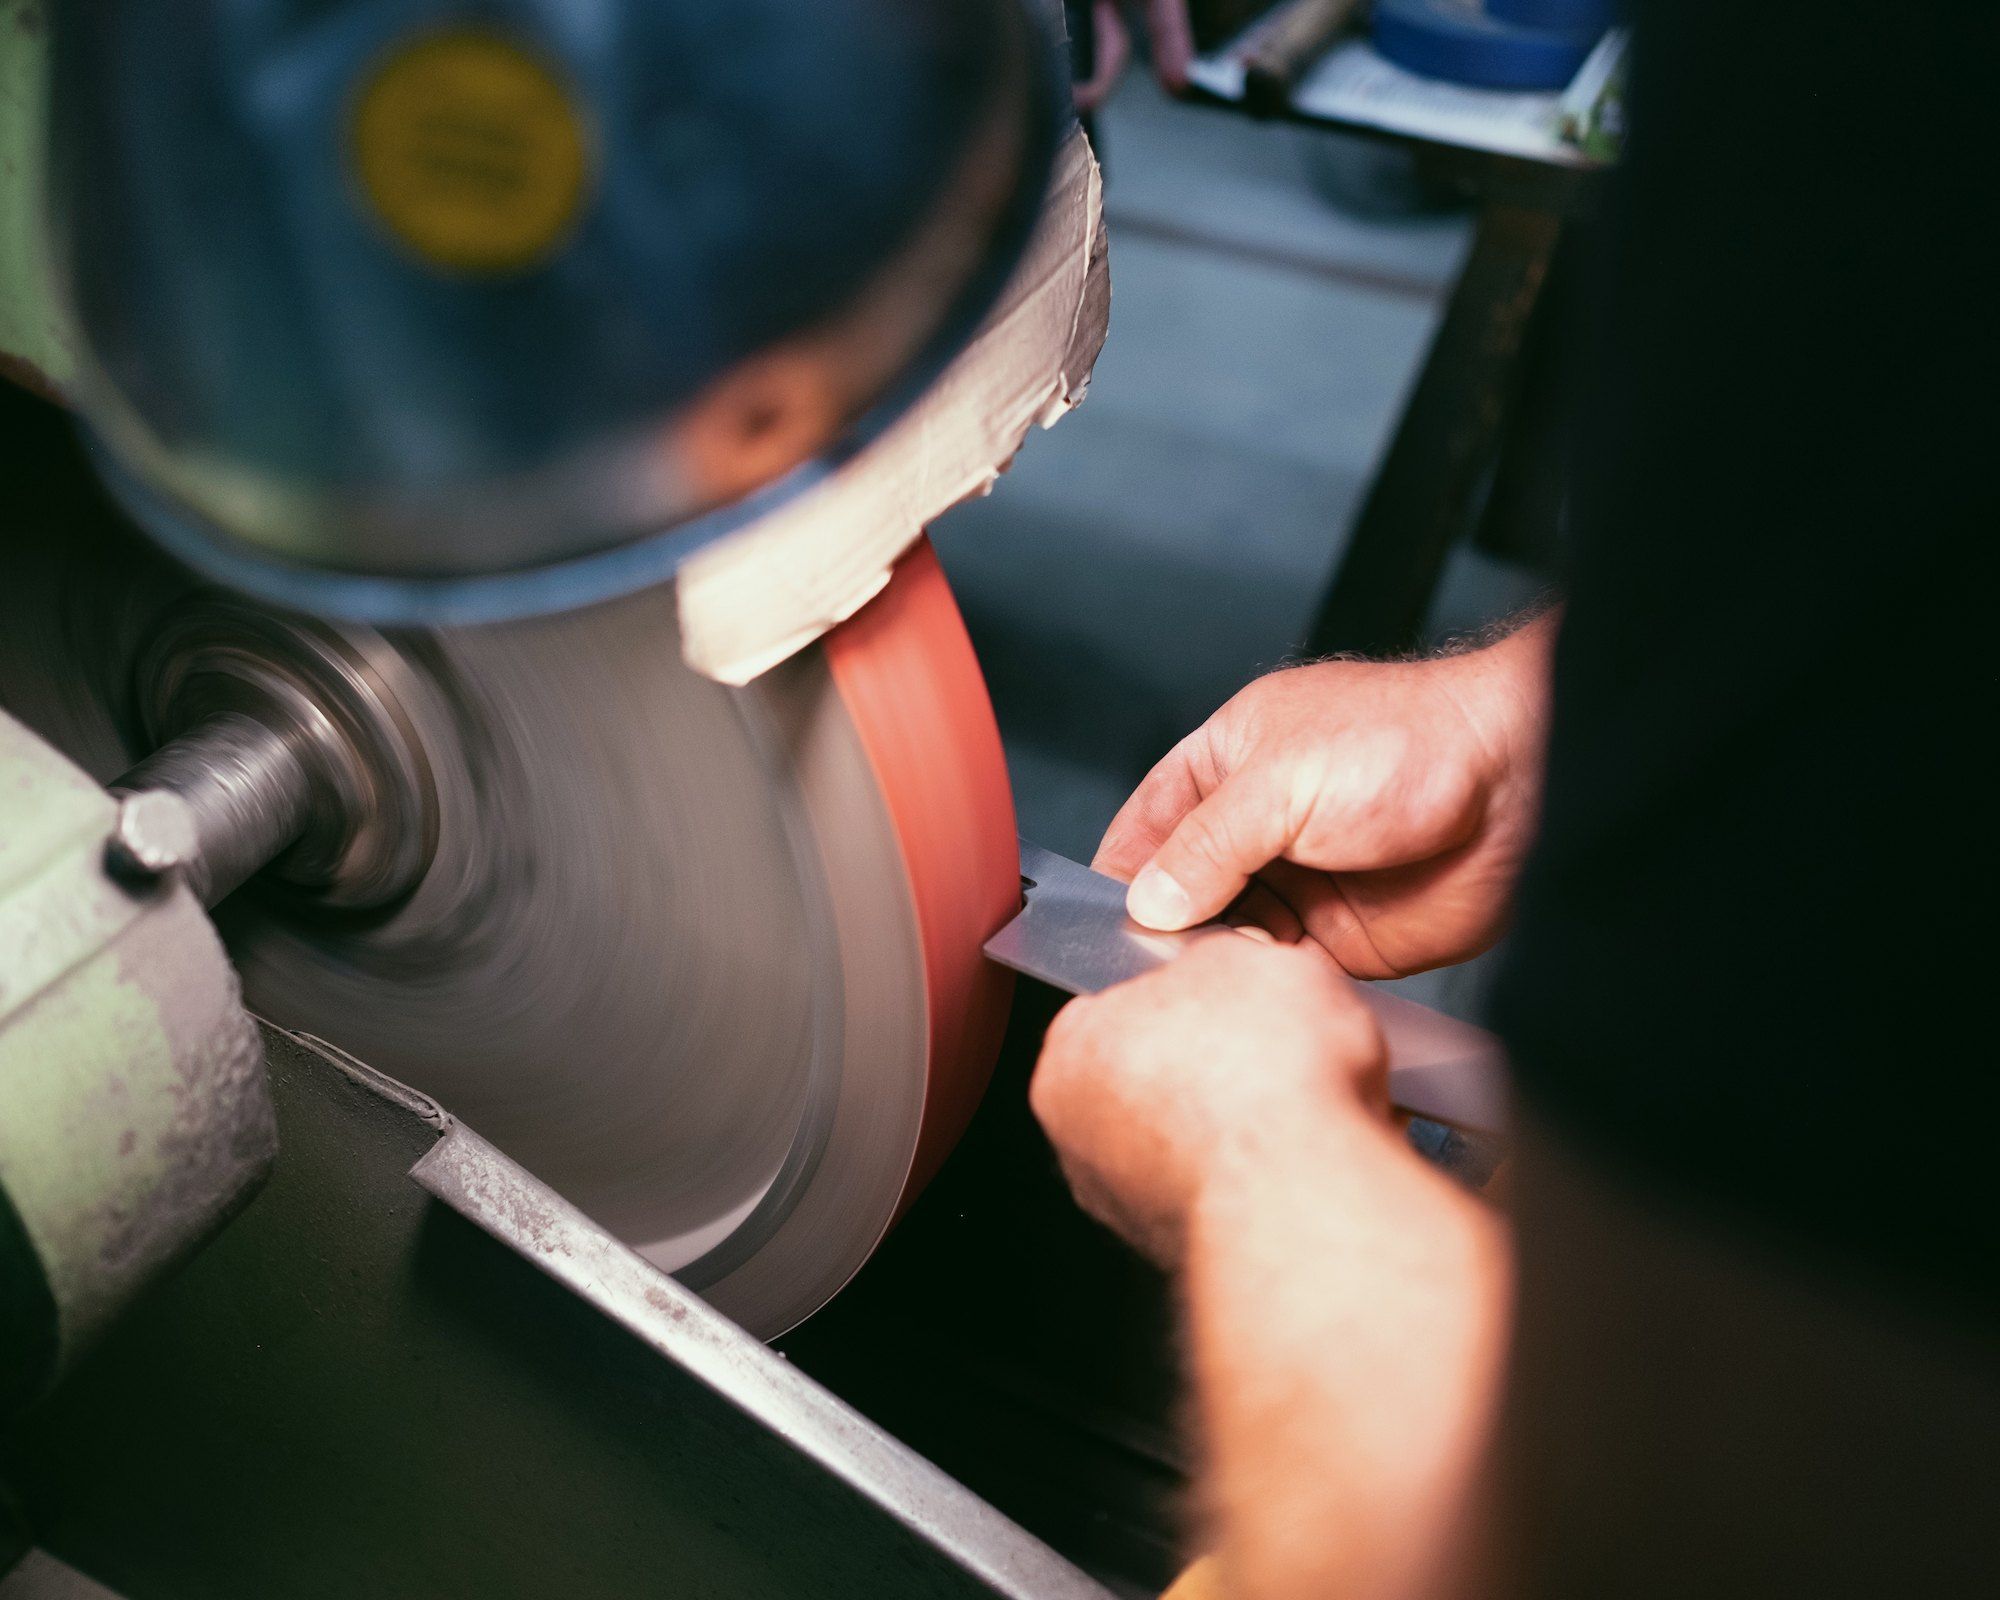  Olav knife being sharpened on high-tech machine